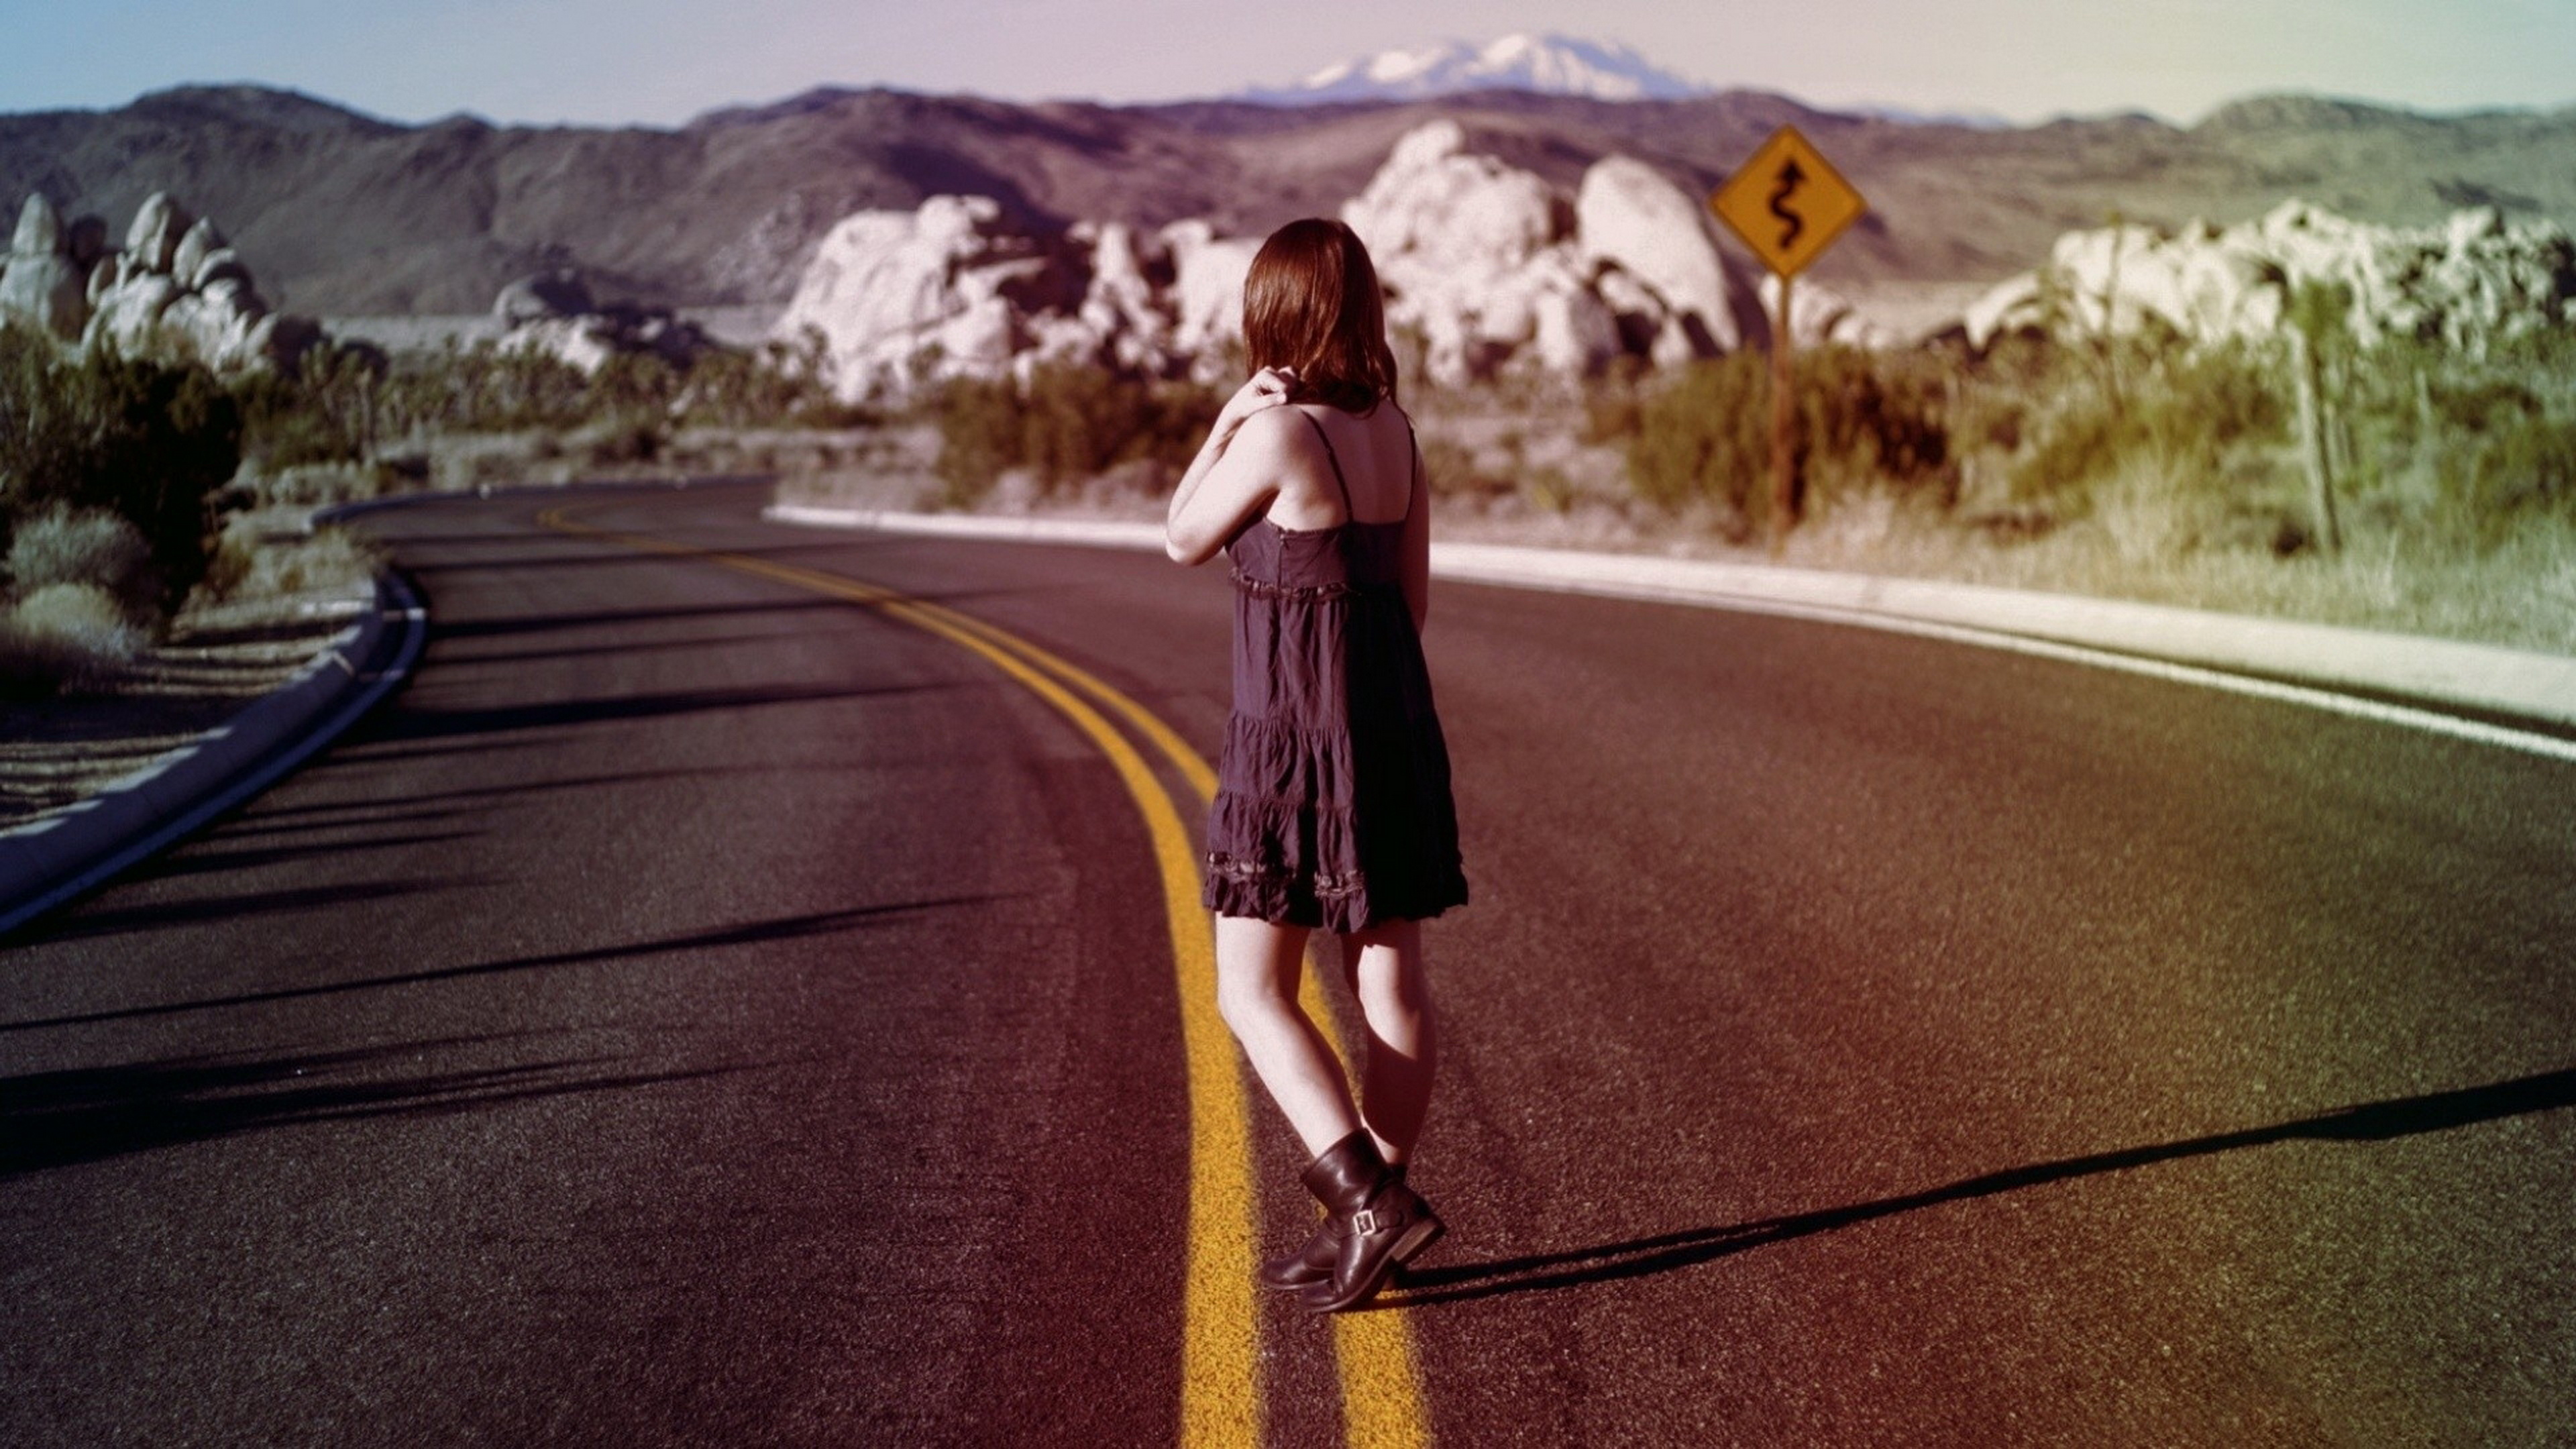 У самого края дороги. Фотосессия на дороге. Девушка на дороге. Девушка идет по дороге. Девочка идет по дороге.